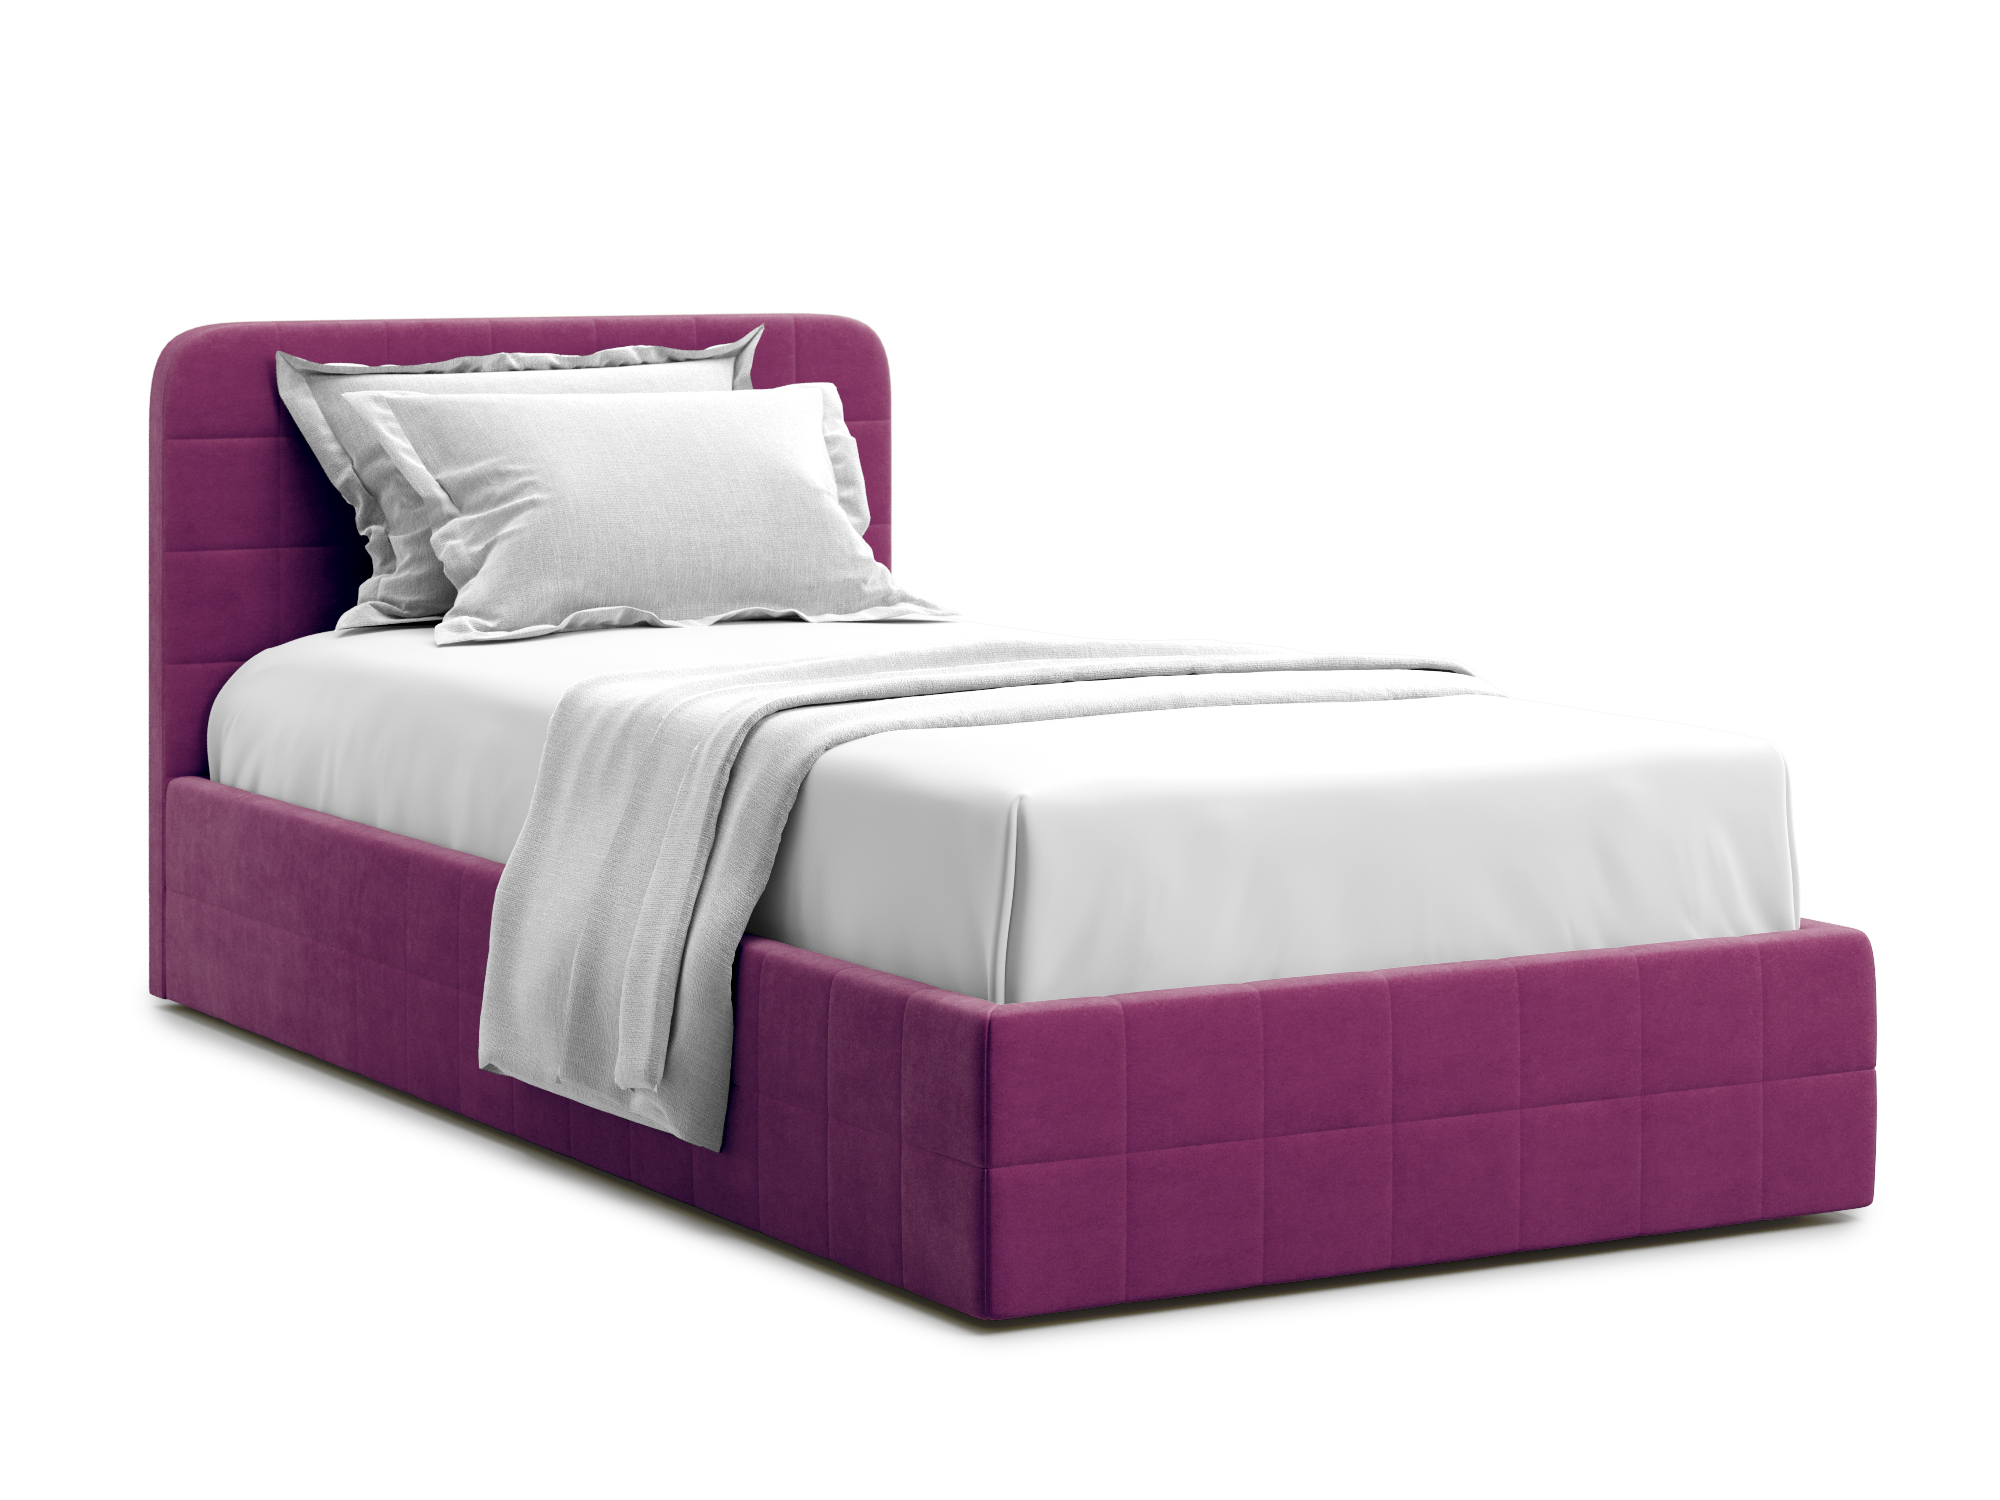 Кровать Adda 90 Velutto 15 Фиолетовый, Массив, ДСП кровать adda 90 velutto 17 бежевый массив дсп